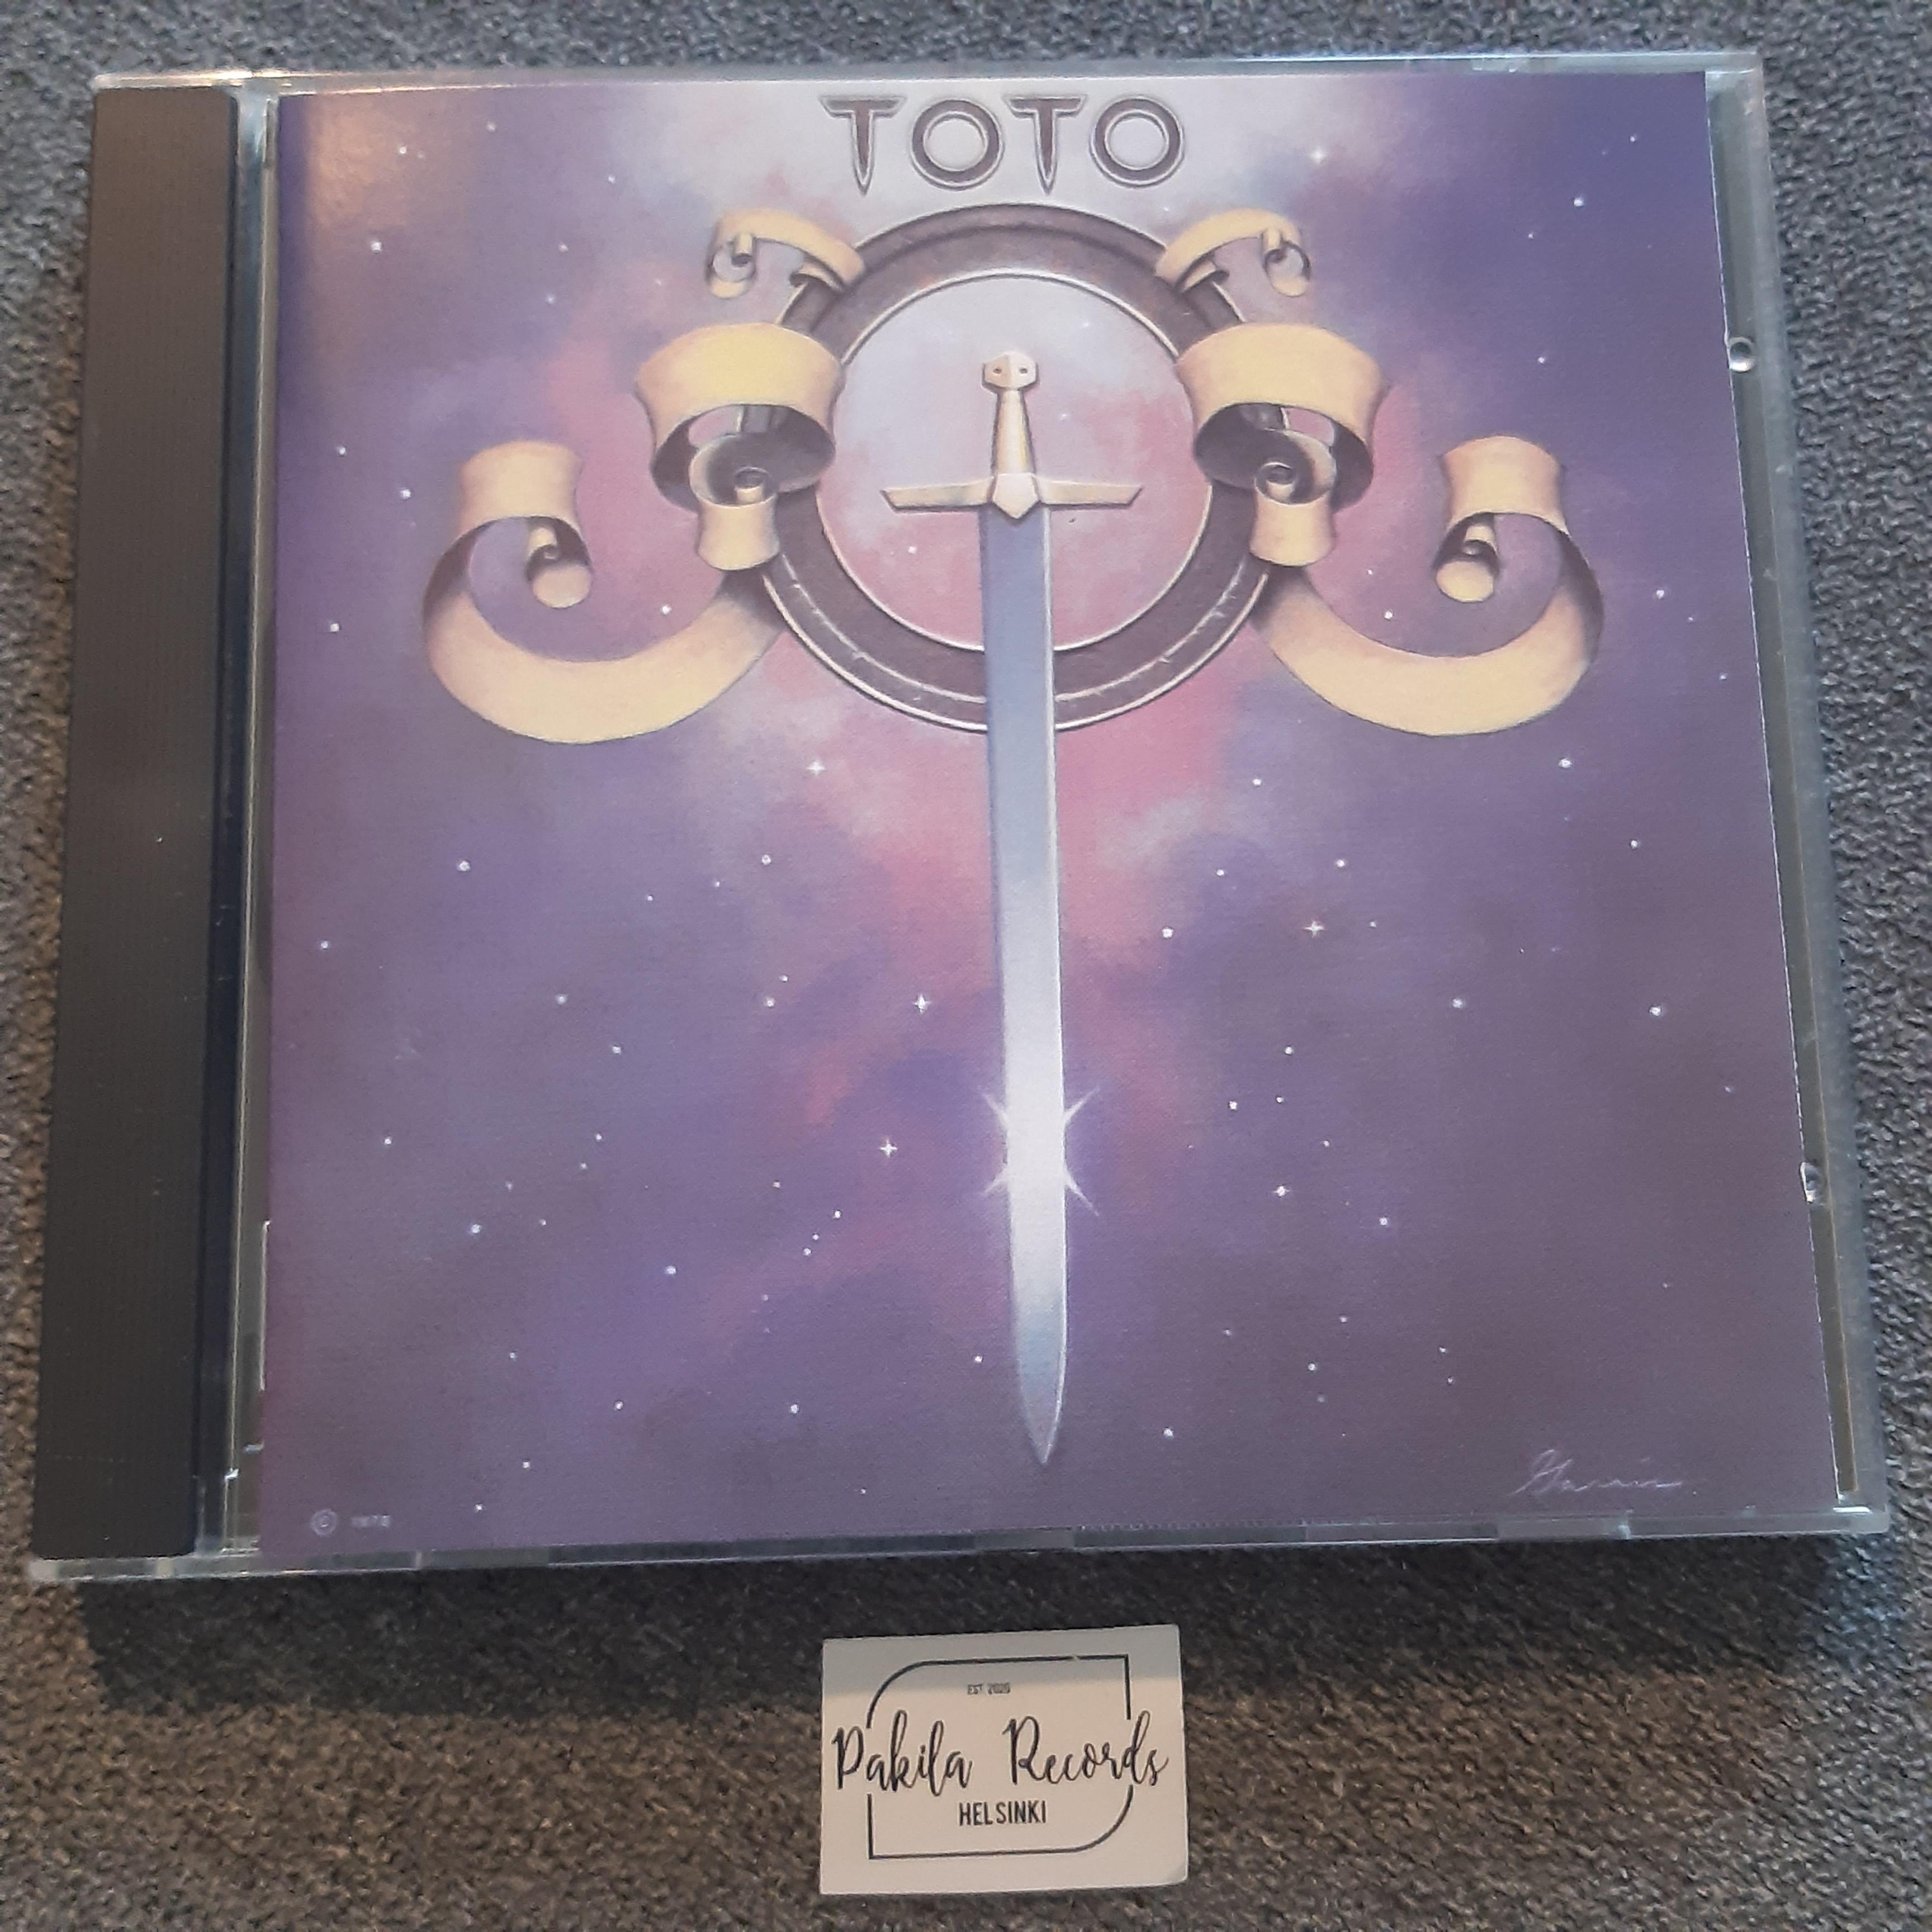 Toto - Toto - CD (käytetty)